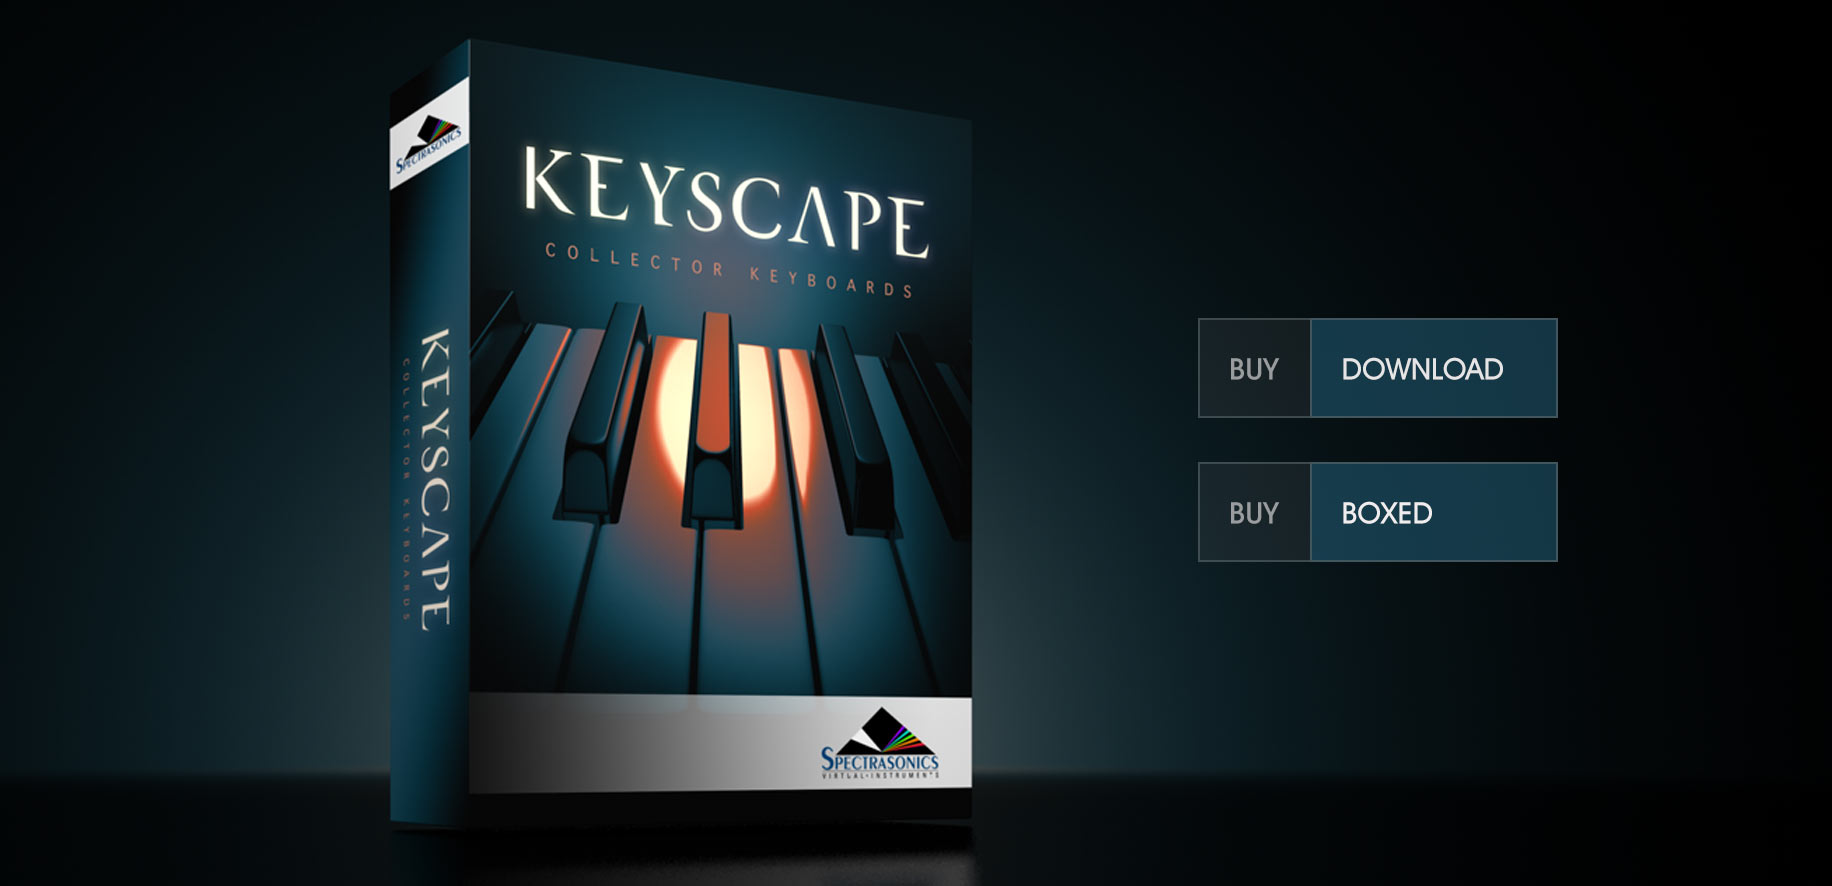 keyscape free download fl studio